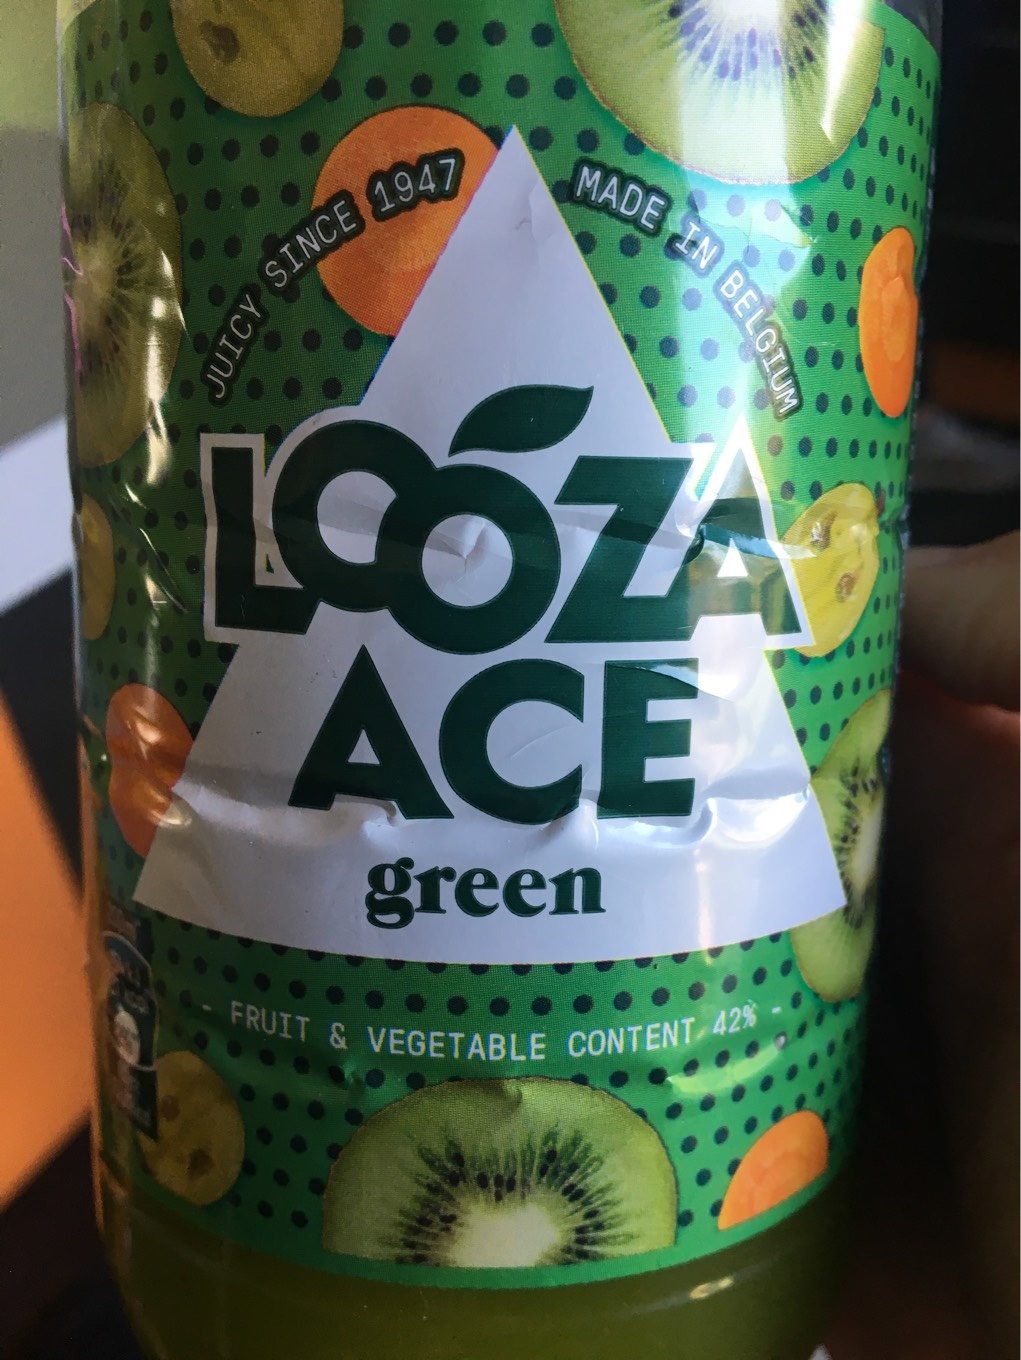 Looza ace green - Produit